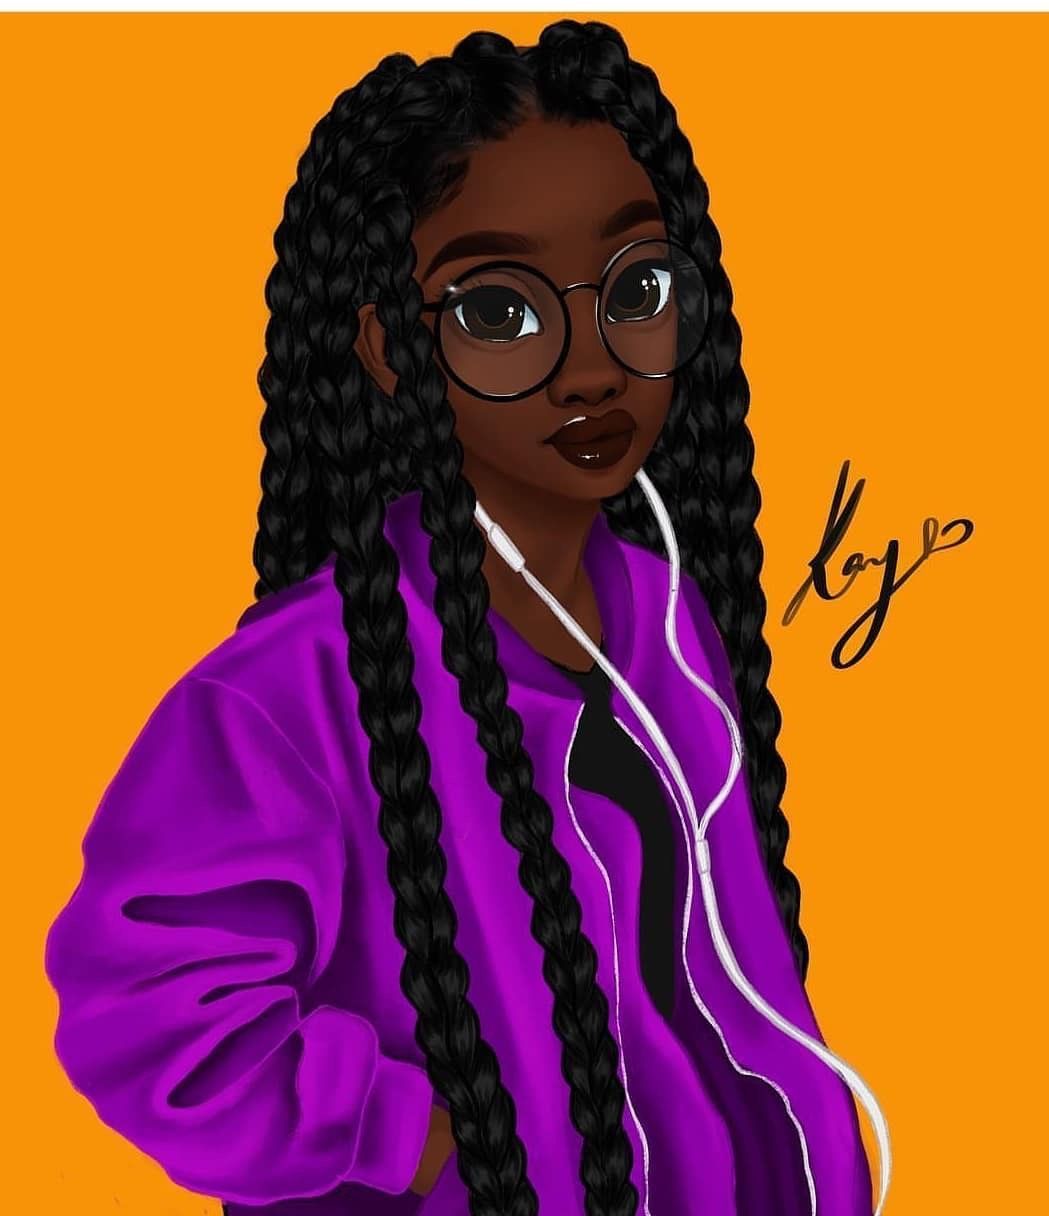 Art. Black girl art, Drawings